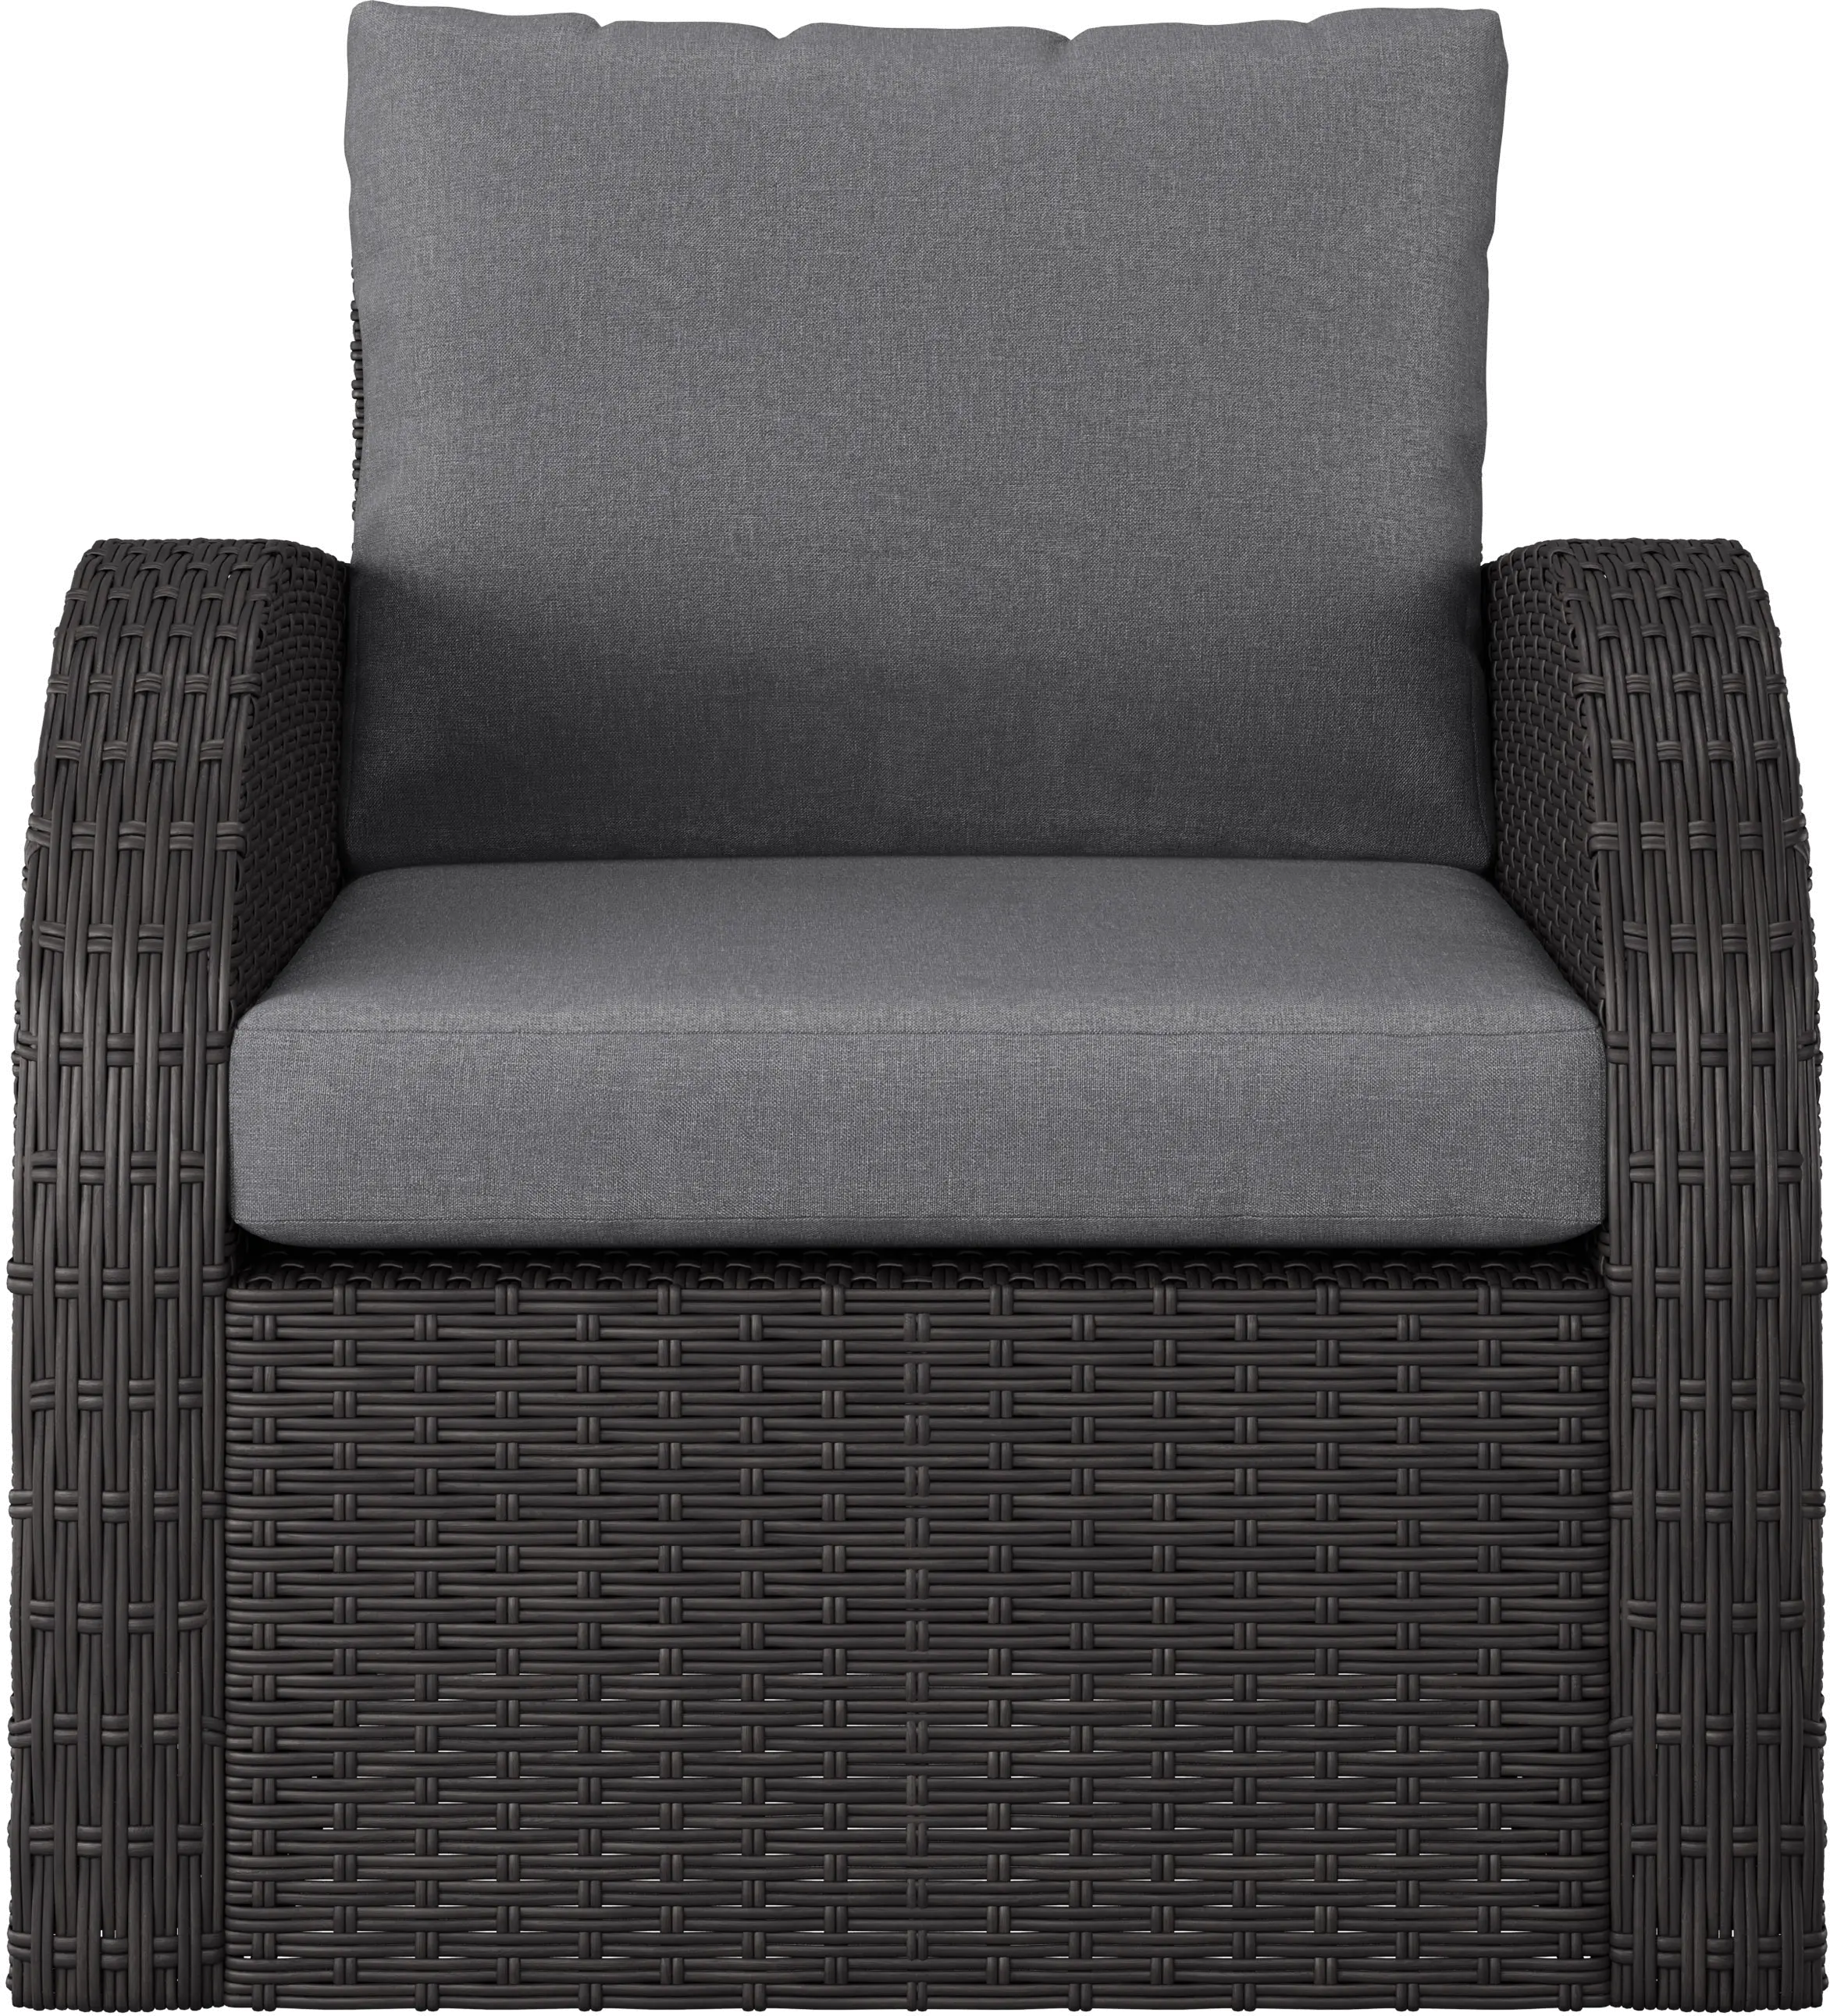 PMJ-200-C Brisbane Charcoal Gray Outdoor Wicker Chair sku PMJ-200-C